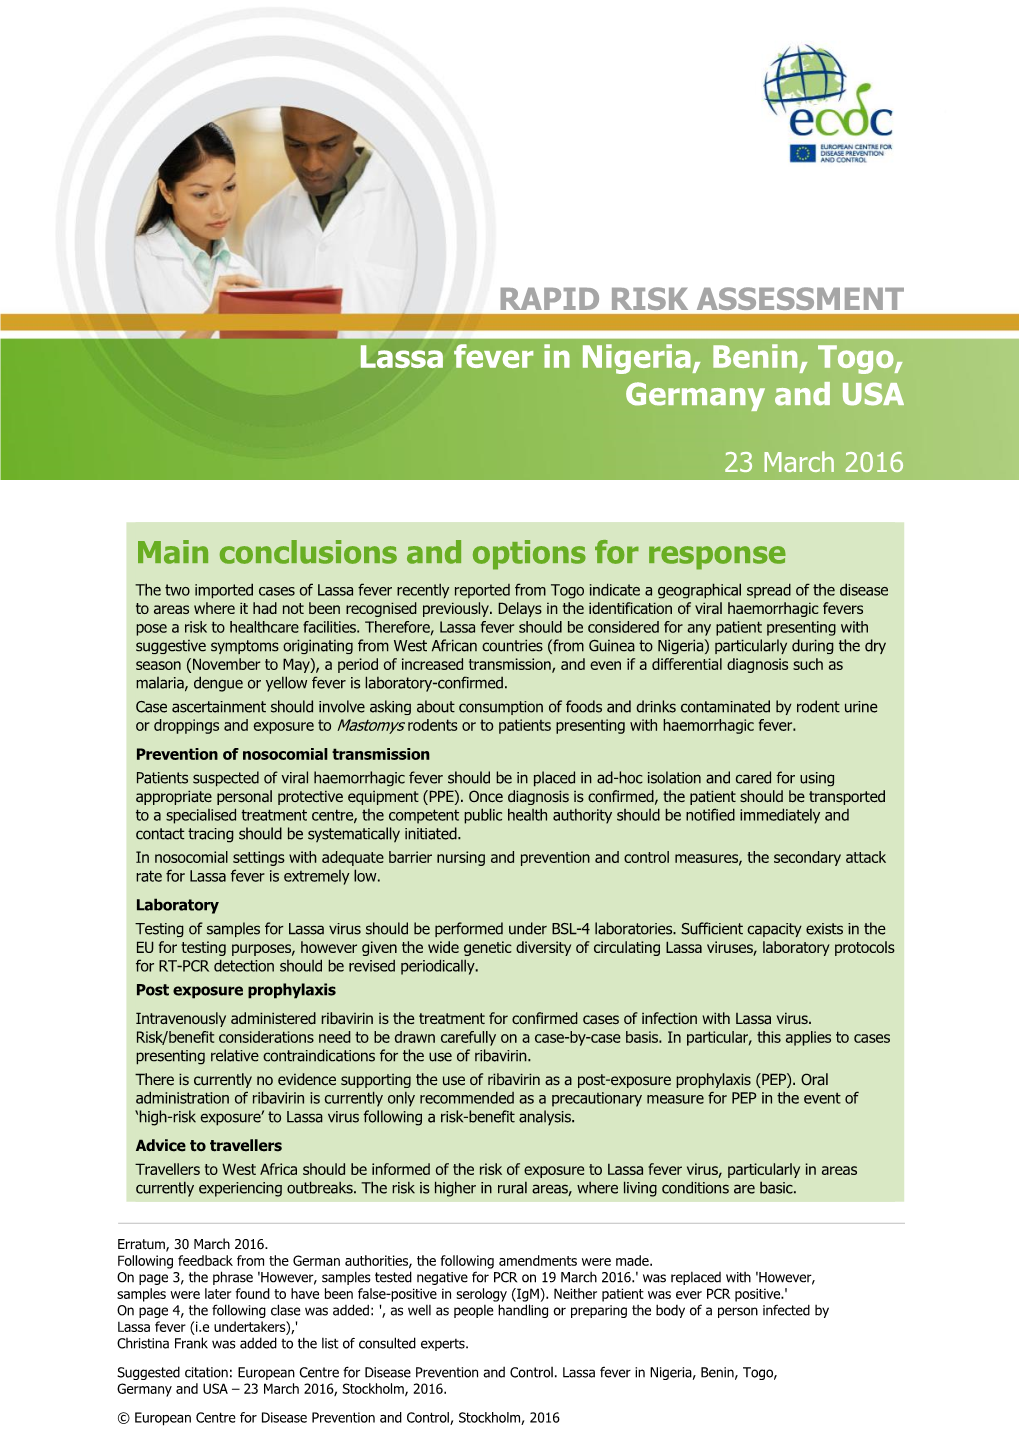 RRA on Lassa Fever in Nigeria, Benin, Togo, Germany And